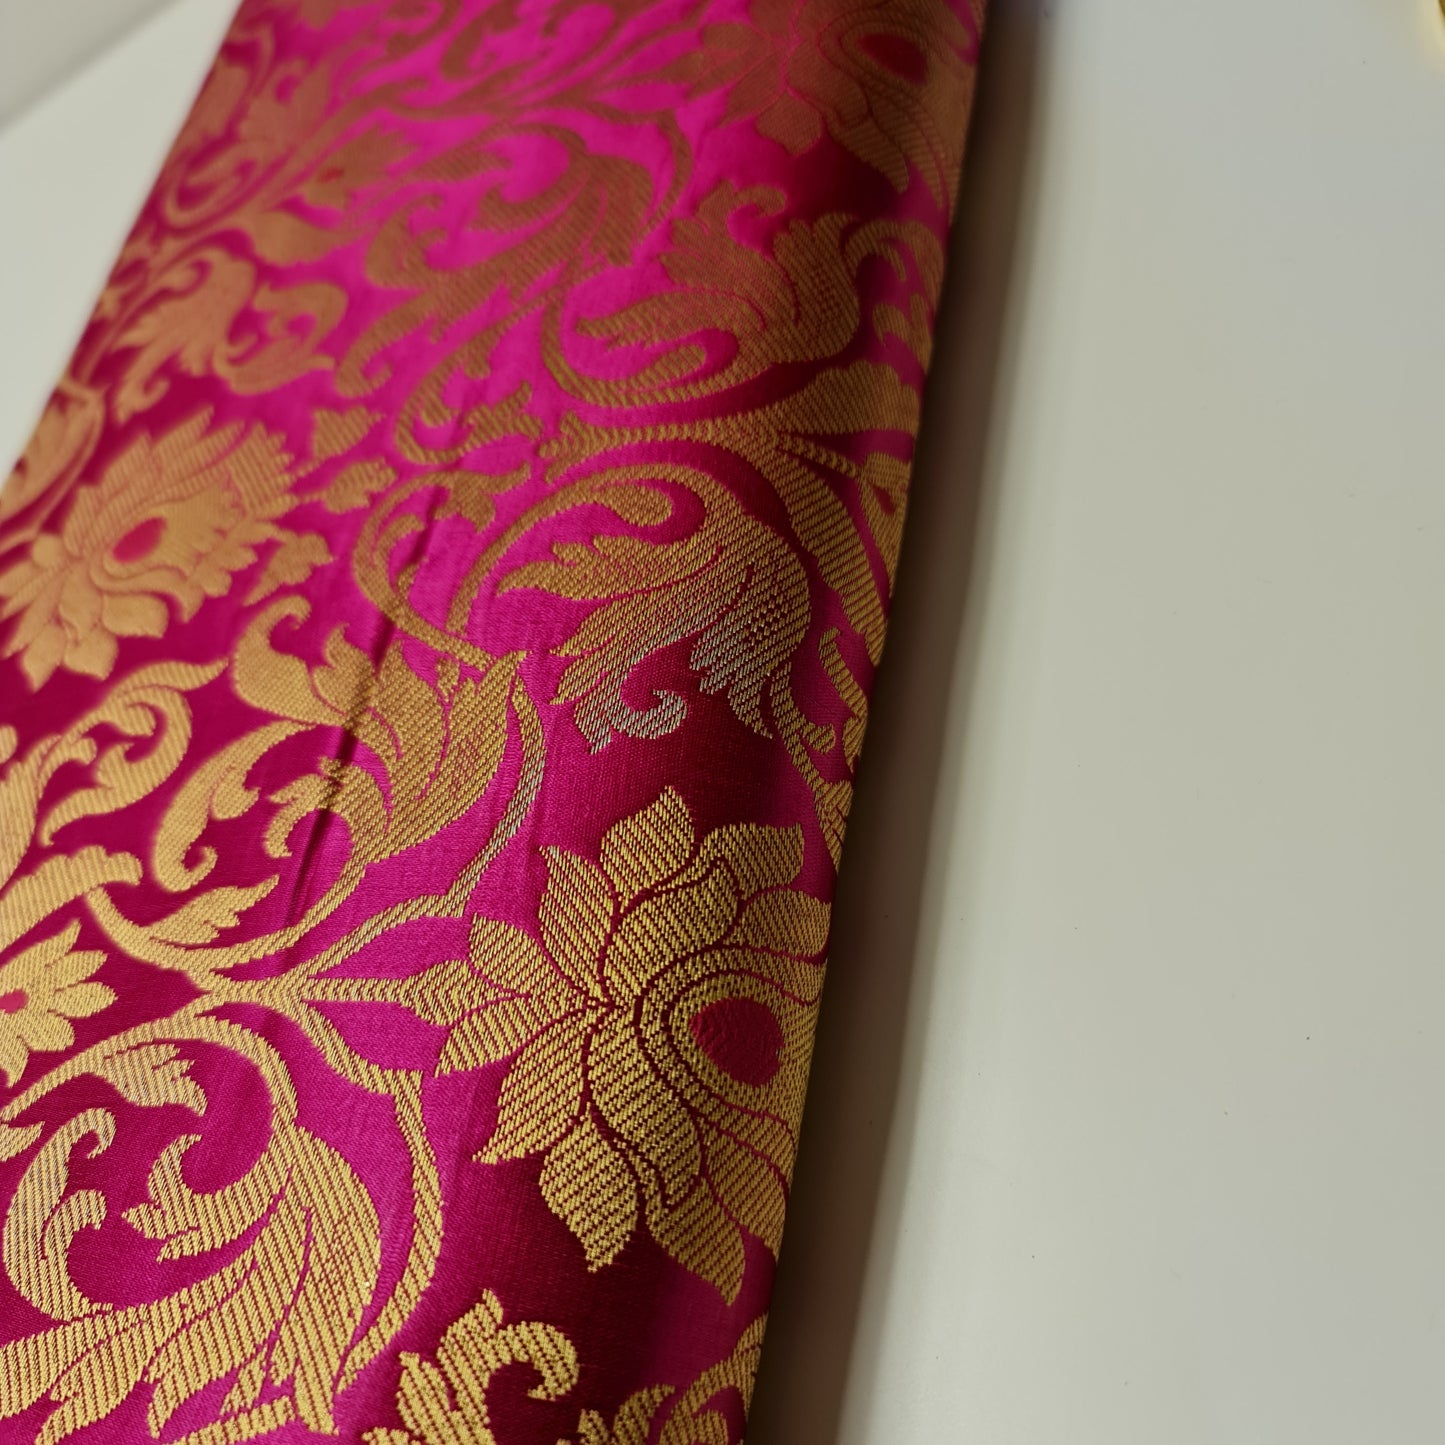 Luxurious Floral Gold Metallic Indian Banarasi Brocade Fabric 44" By The Meter (Cerise Pink)